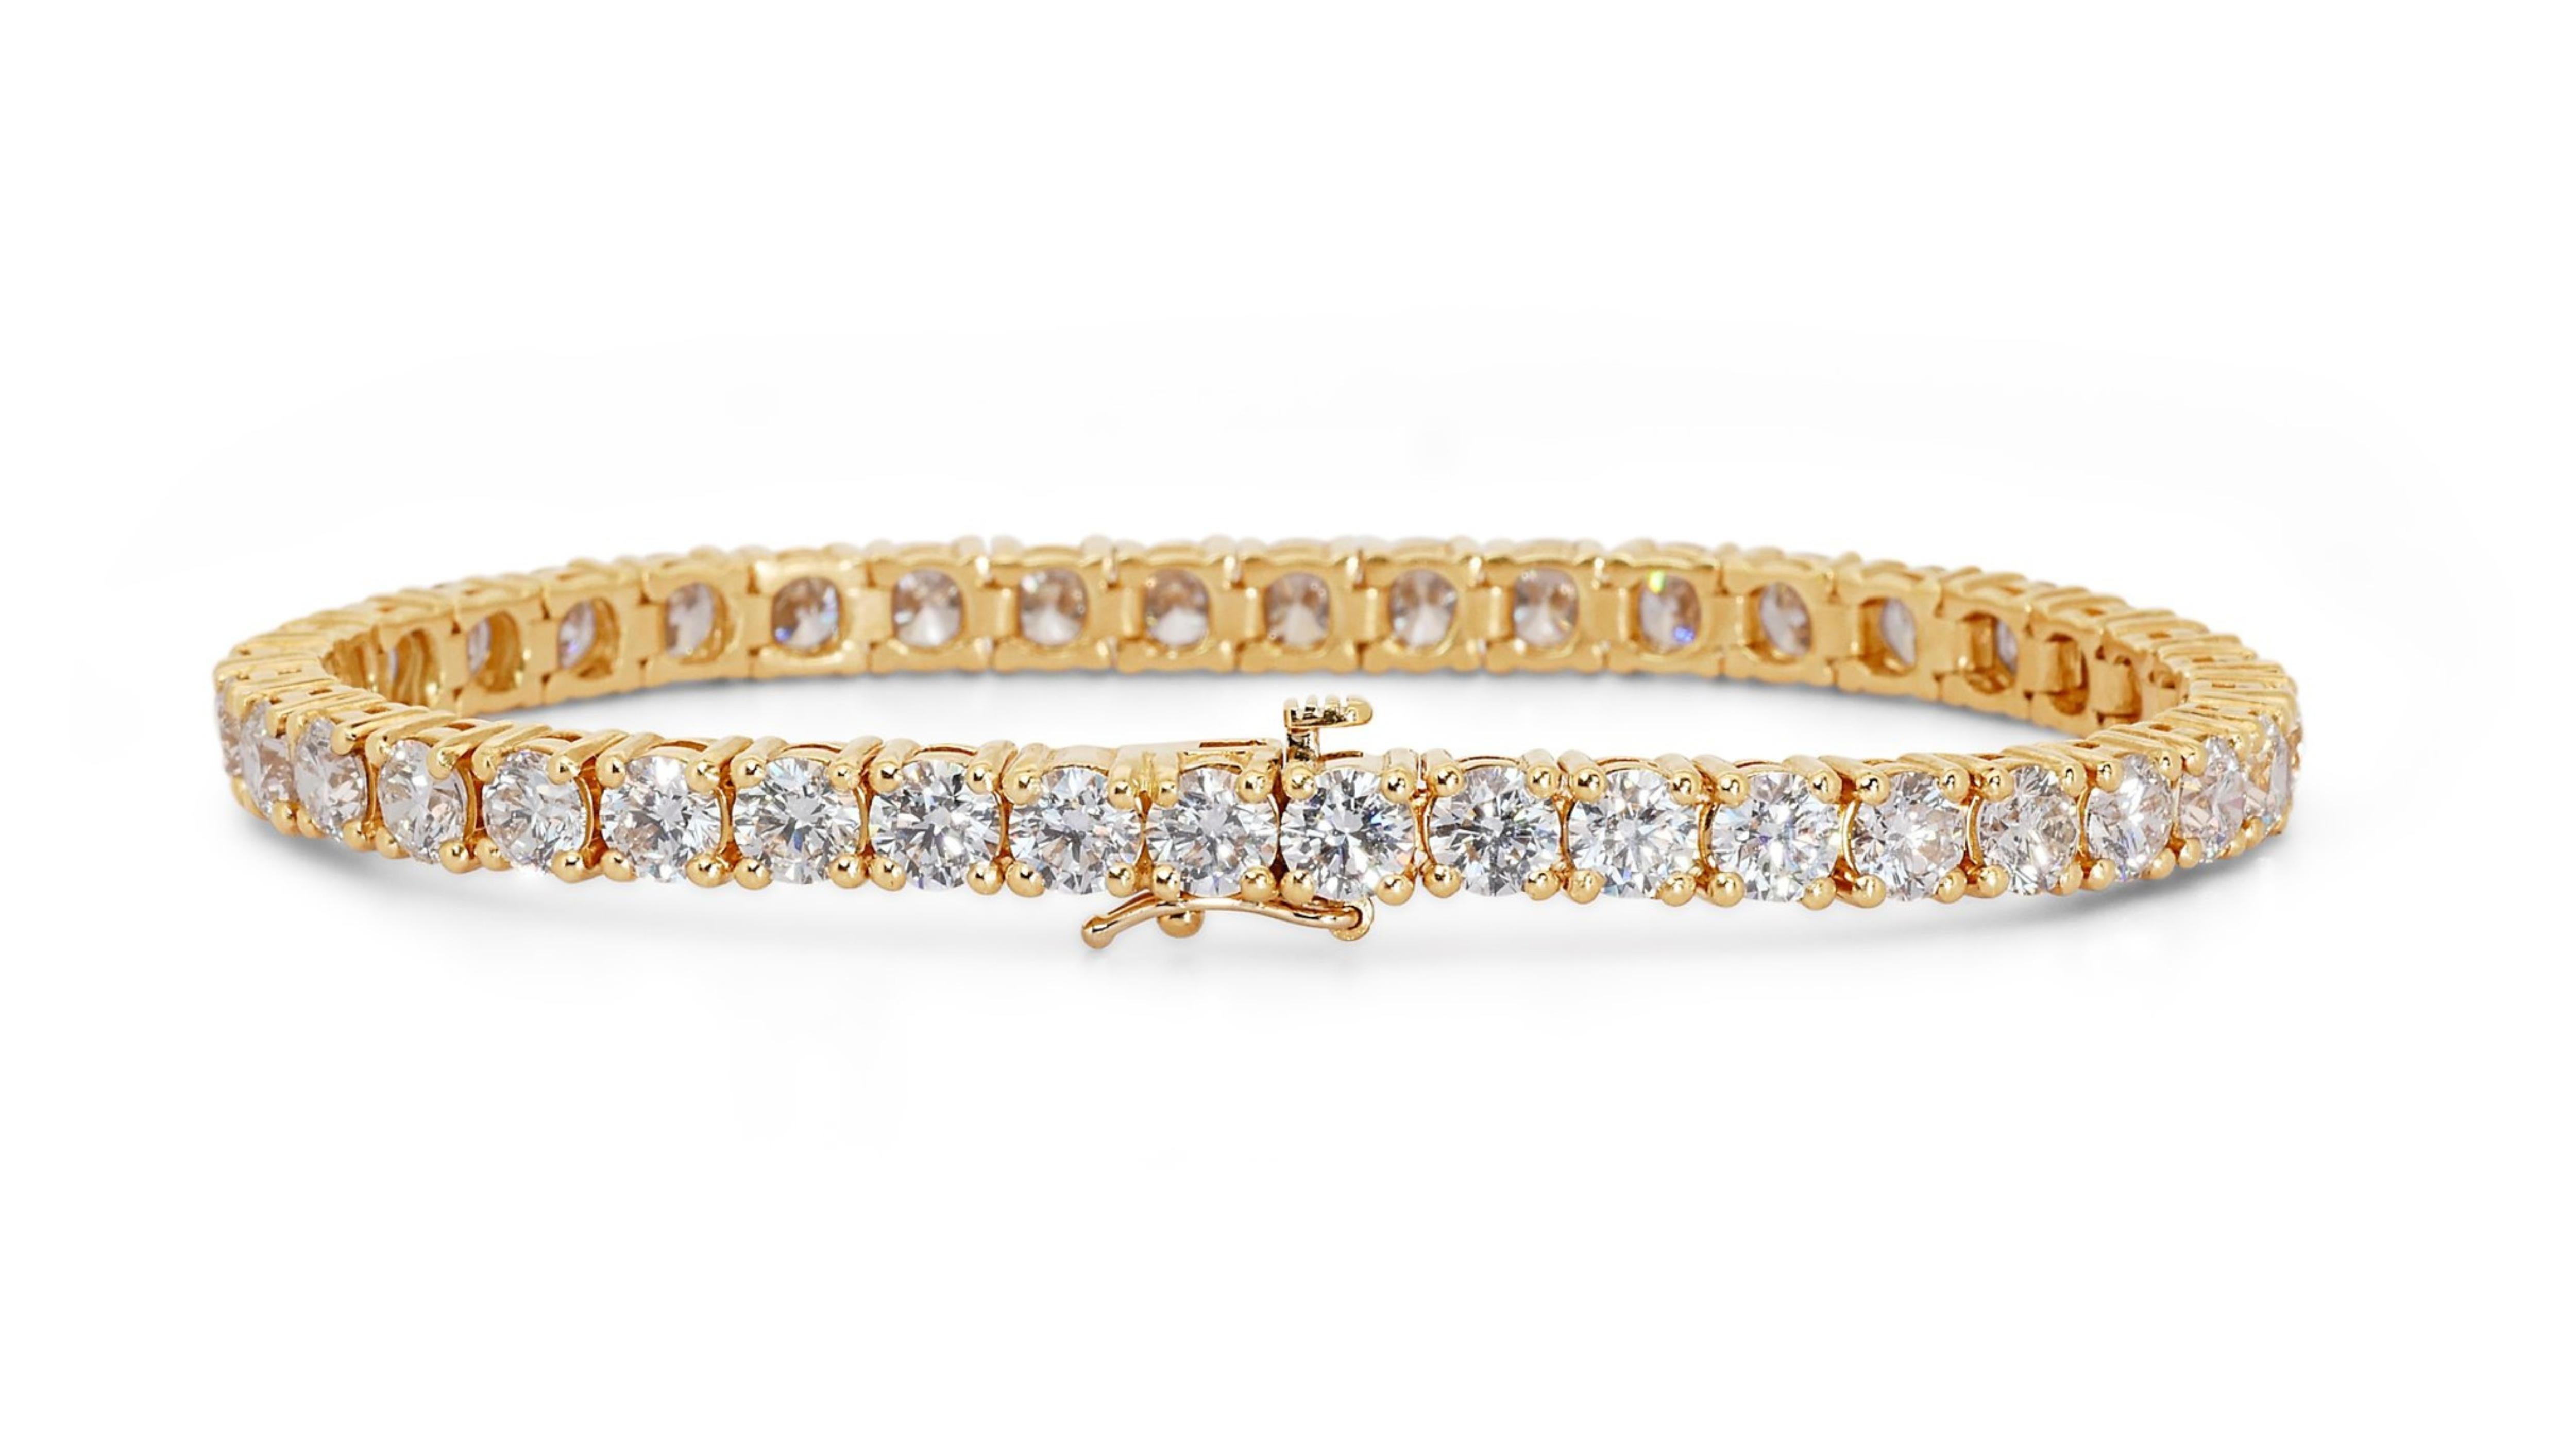 Ravishing 18k Yellow Gold Bracelet w/ 12 ct Natural Diamond IGI Certificate For Sale 3